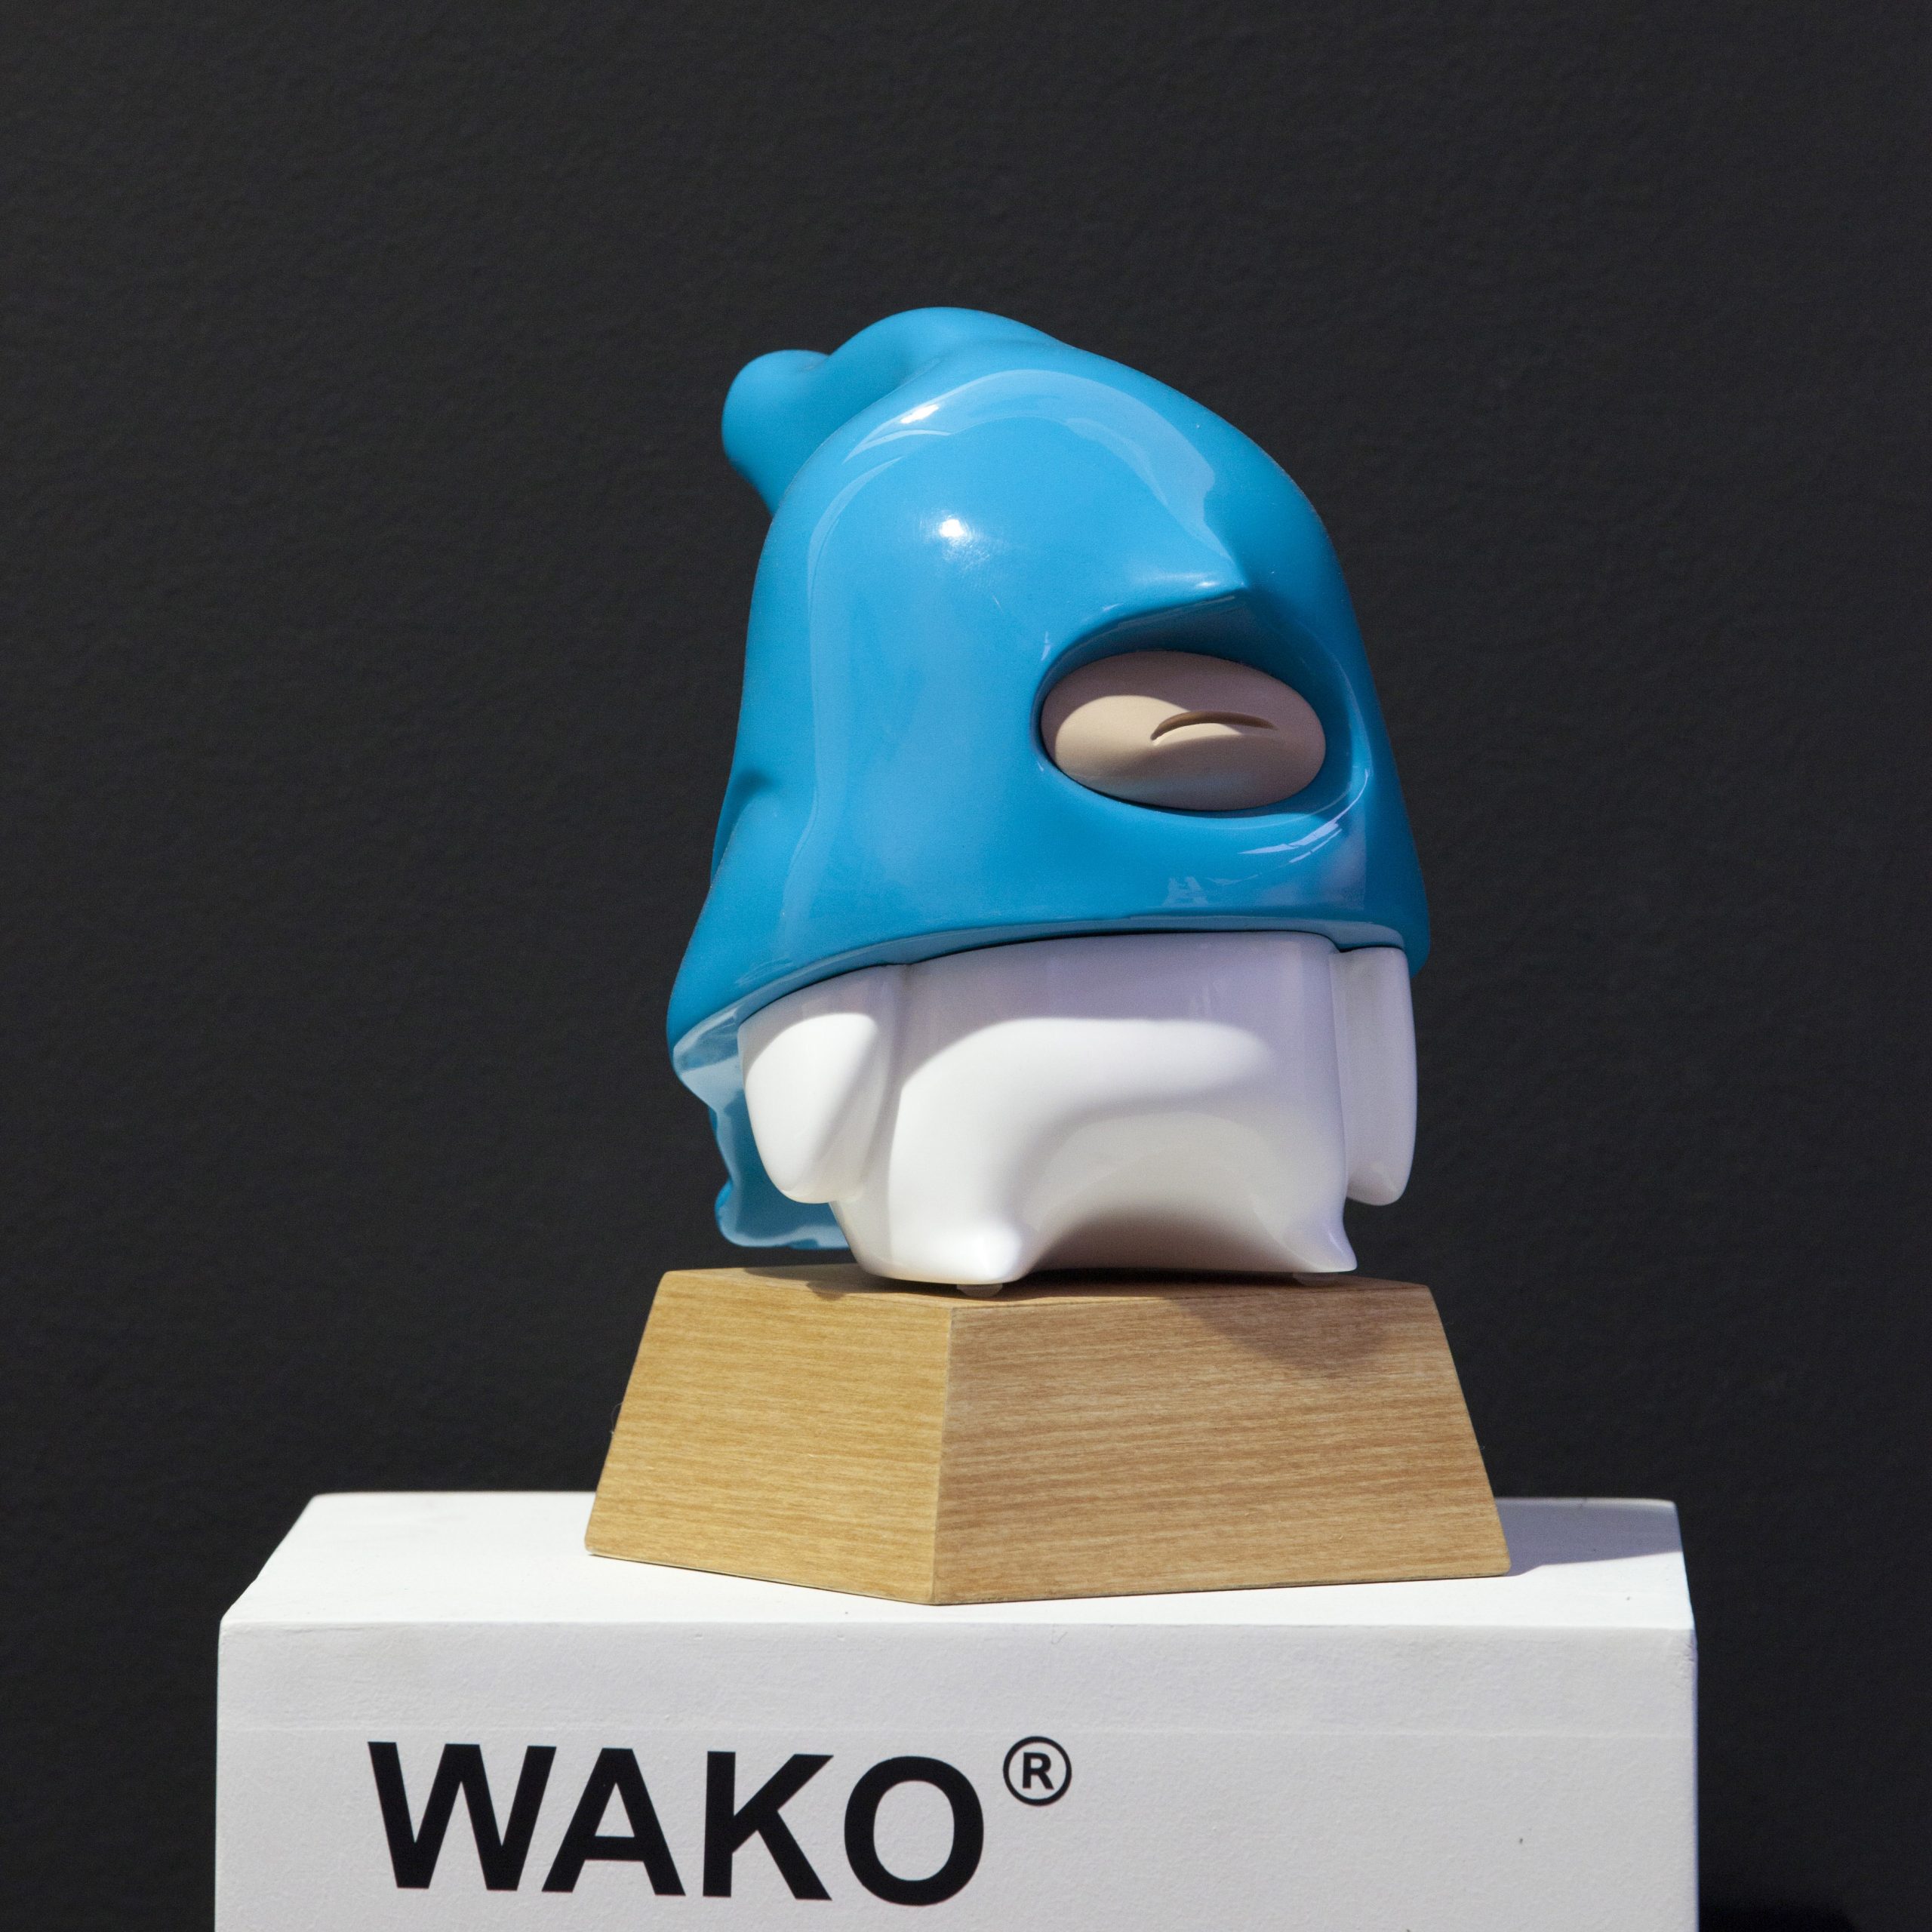 Limited Edition Art Toys: The Three WAKO animals